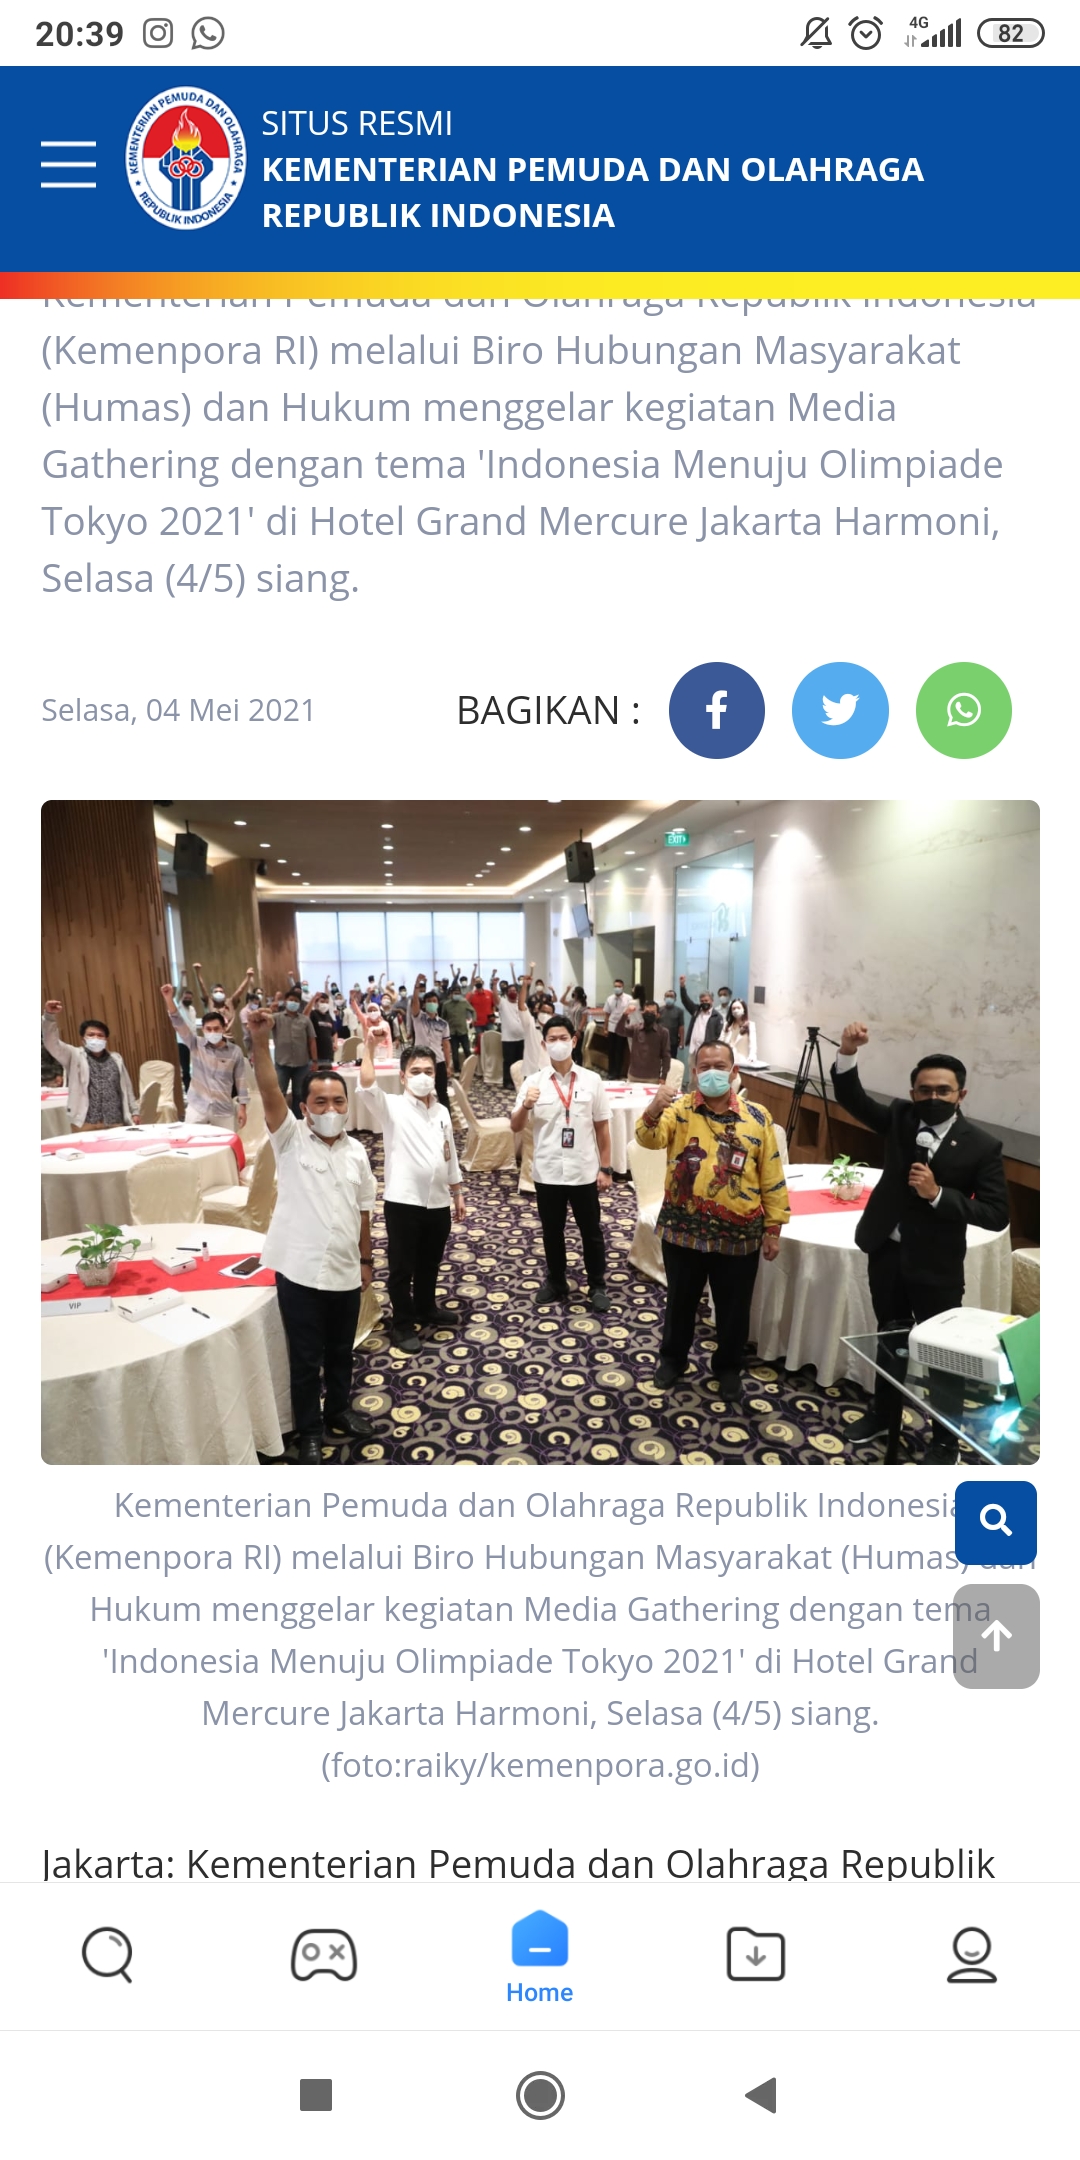 Eratkan Hubungan dengan Media, Kemenpora Gelar Gathering Bertajuk Indonesia Menuju Olimpiade